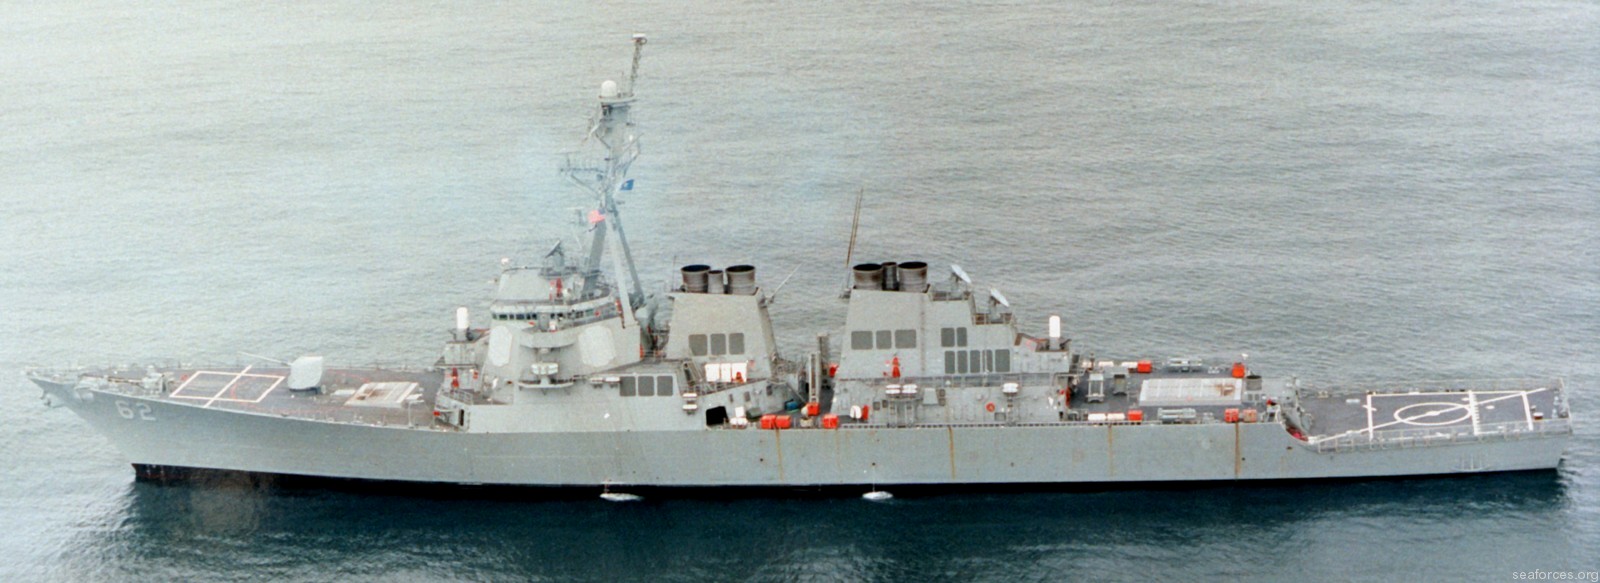 ddg-62 uss fitzgerald guided missile destroyer 1995 112 sea trials bath iron works maine